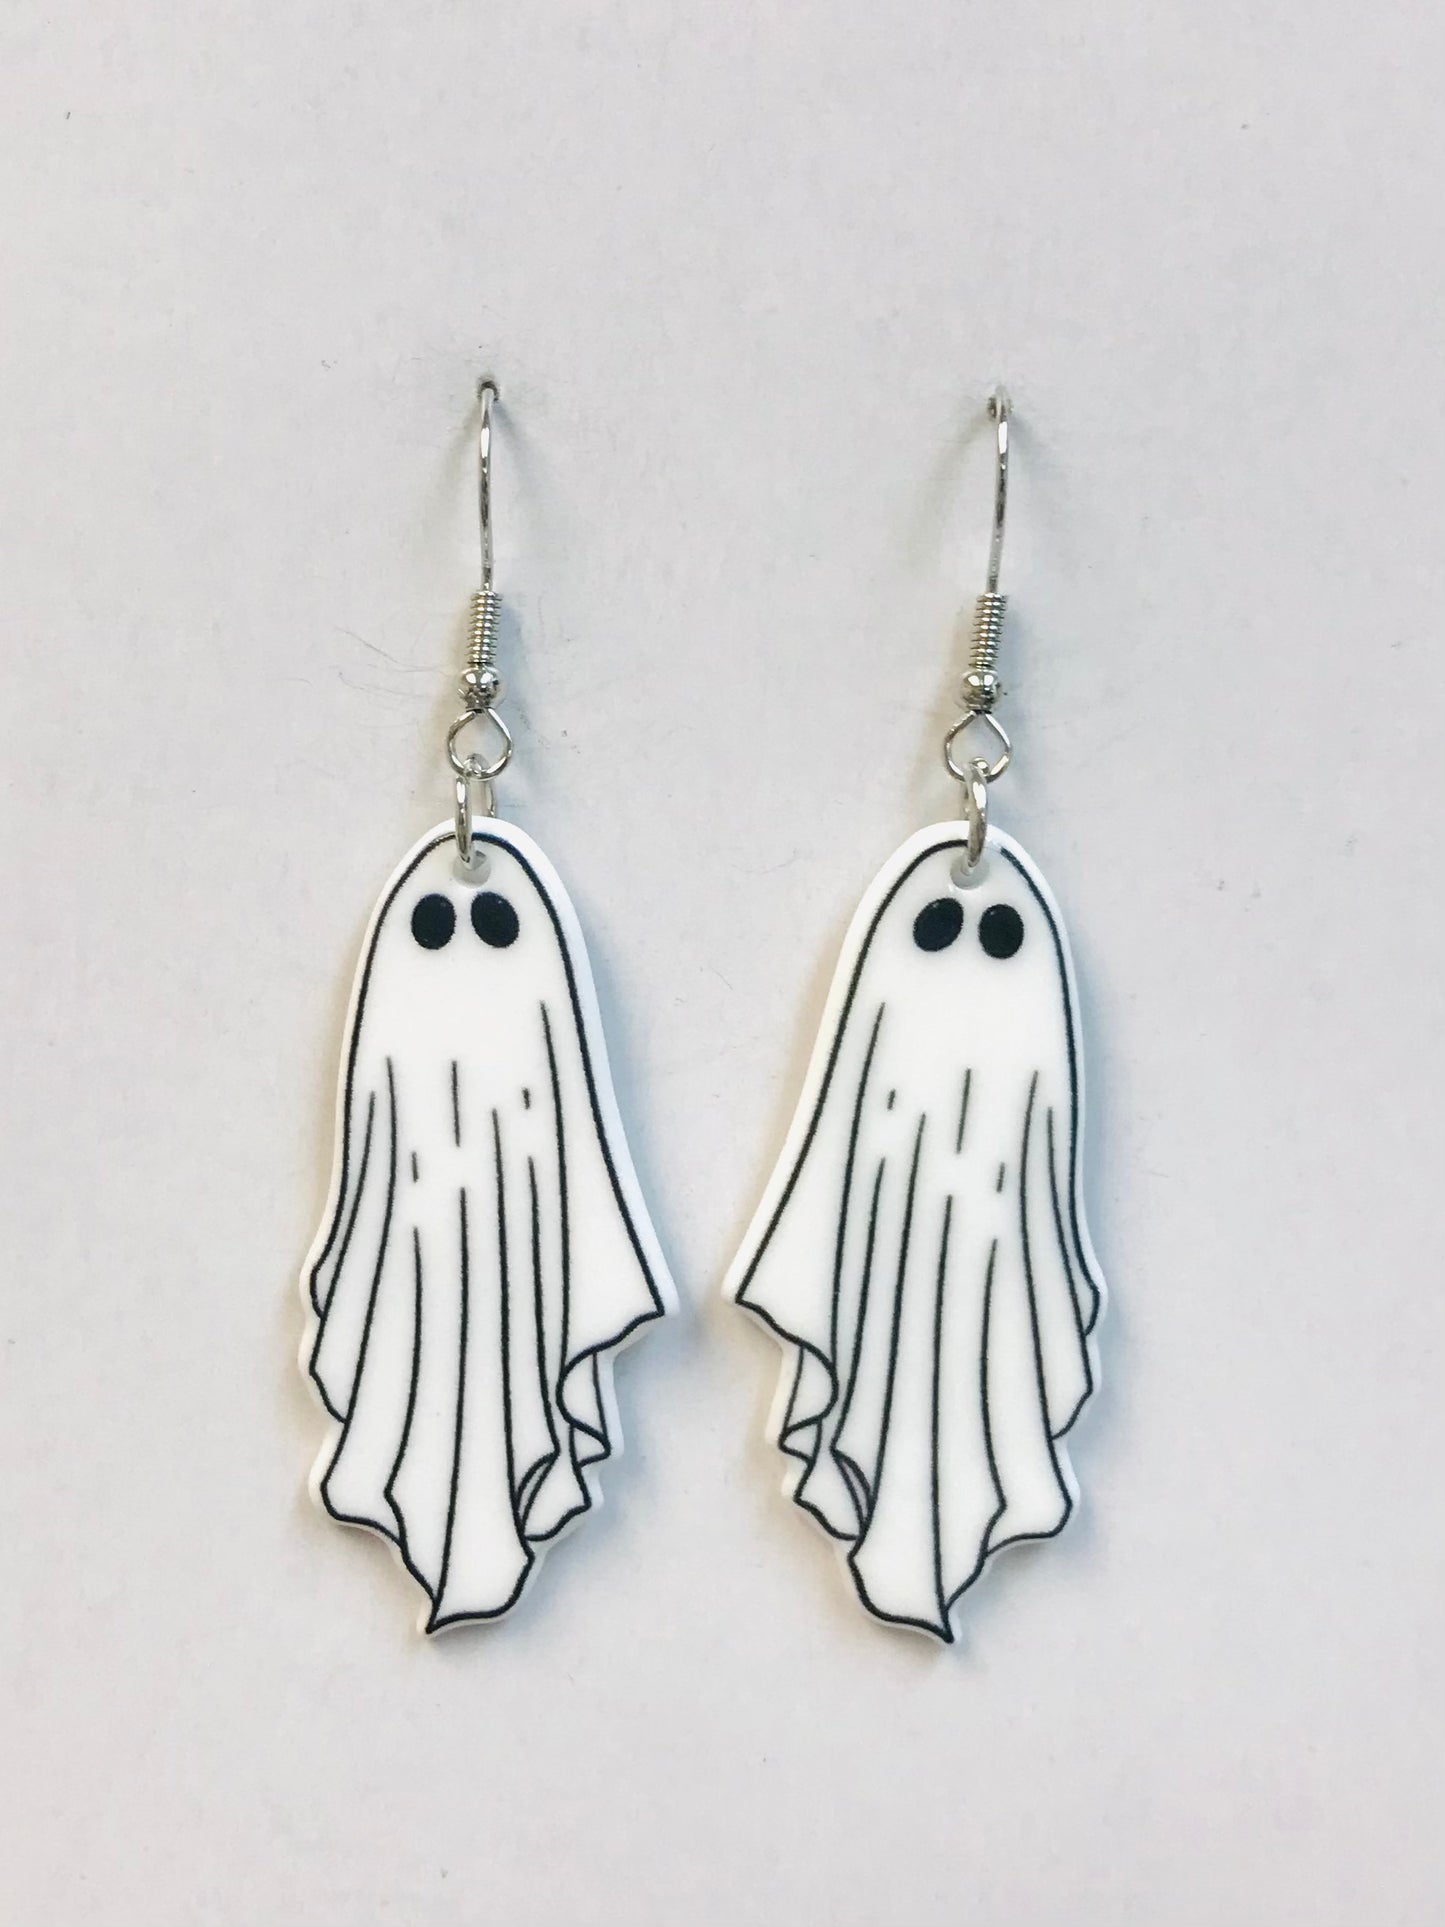 2 White Ghost Halloween Acrylic Earrings